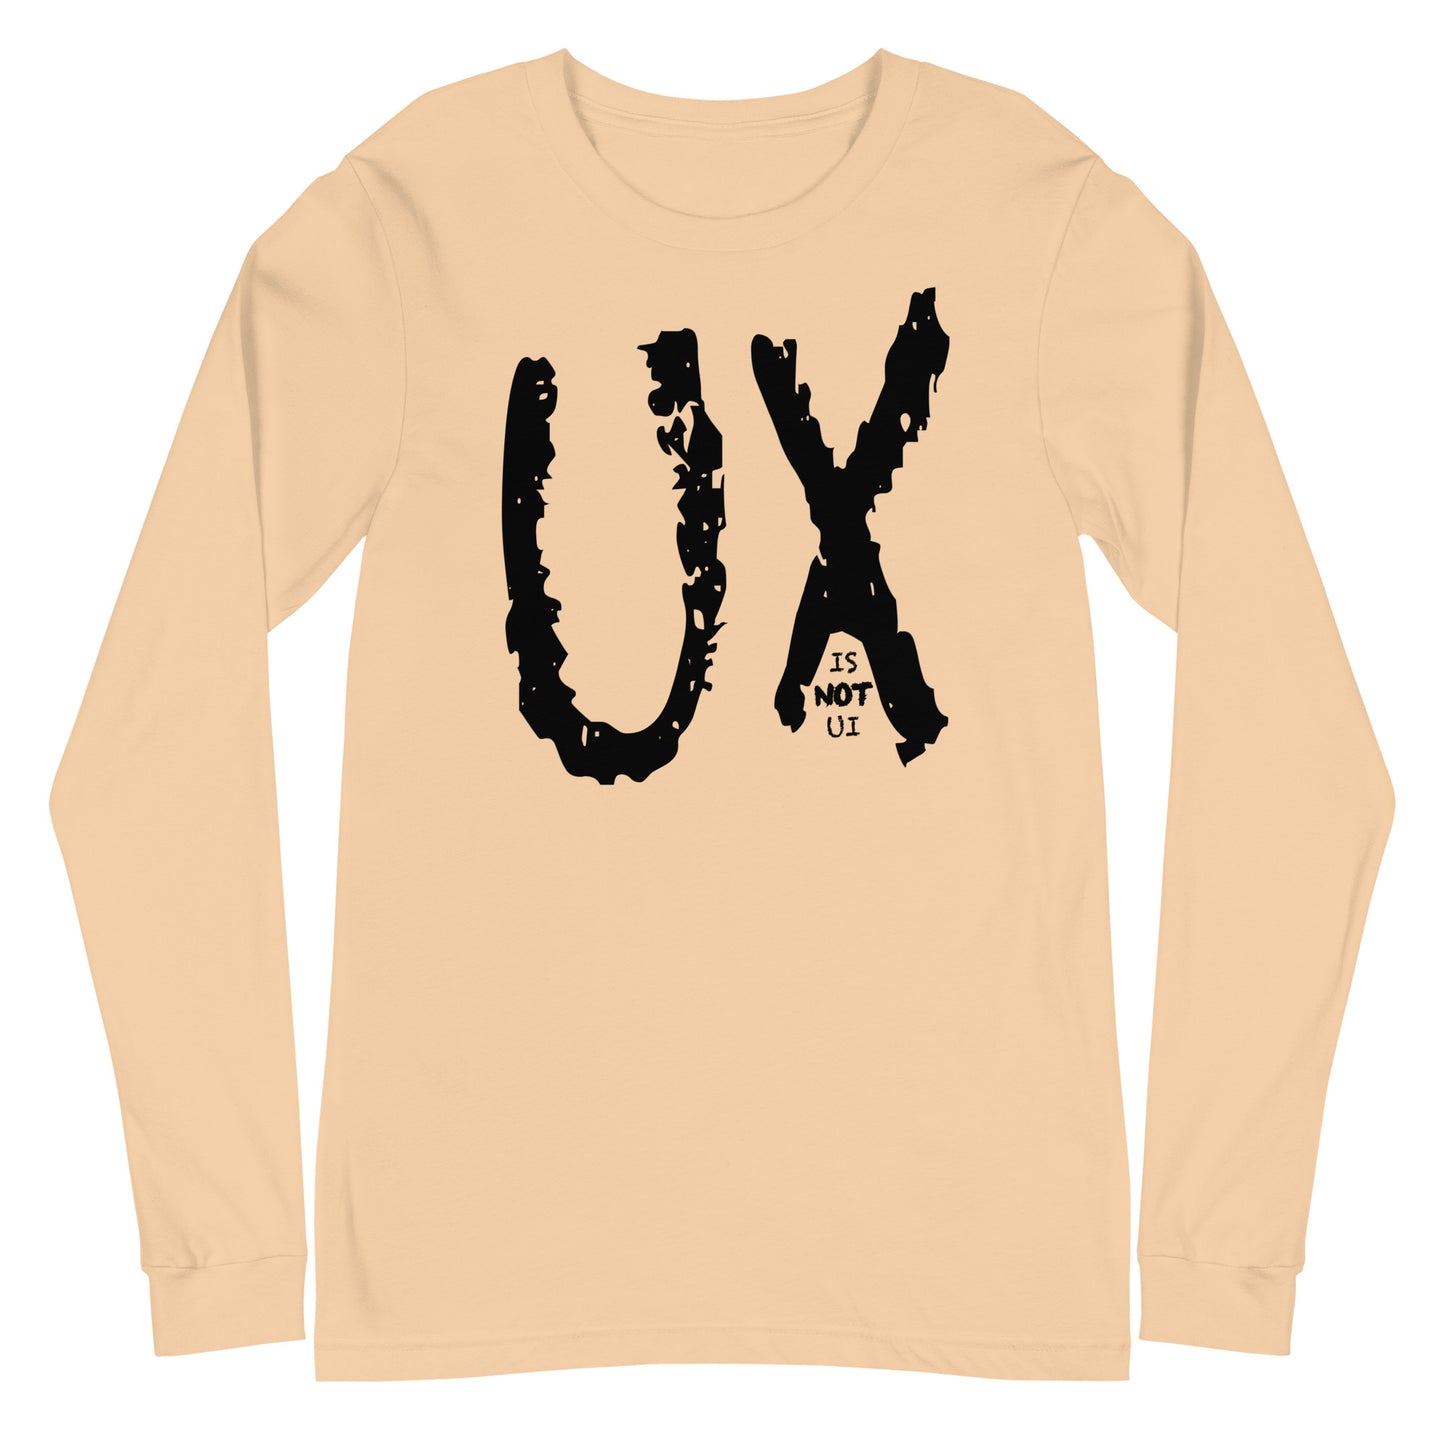 UX is not UI #3 Long-Sleeve T